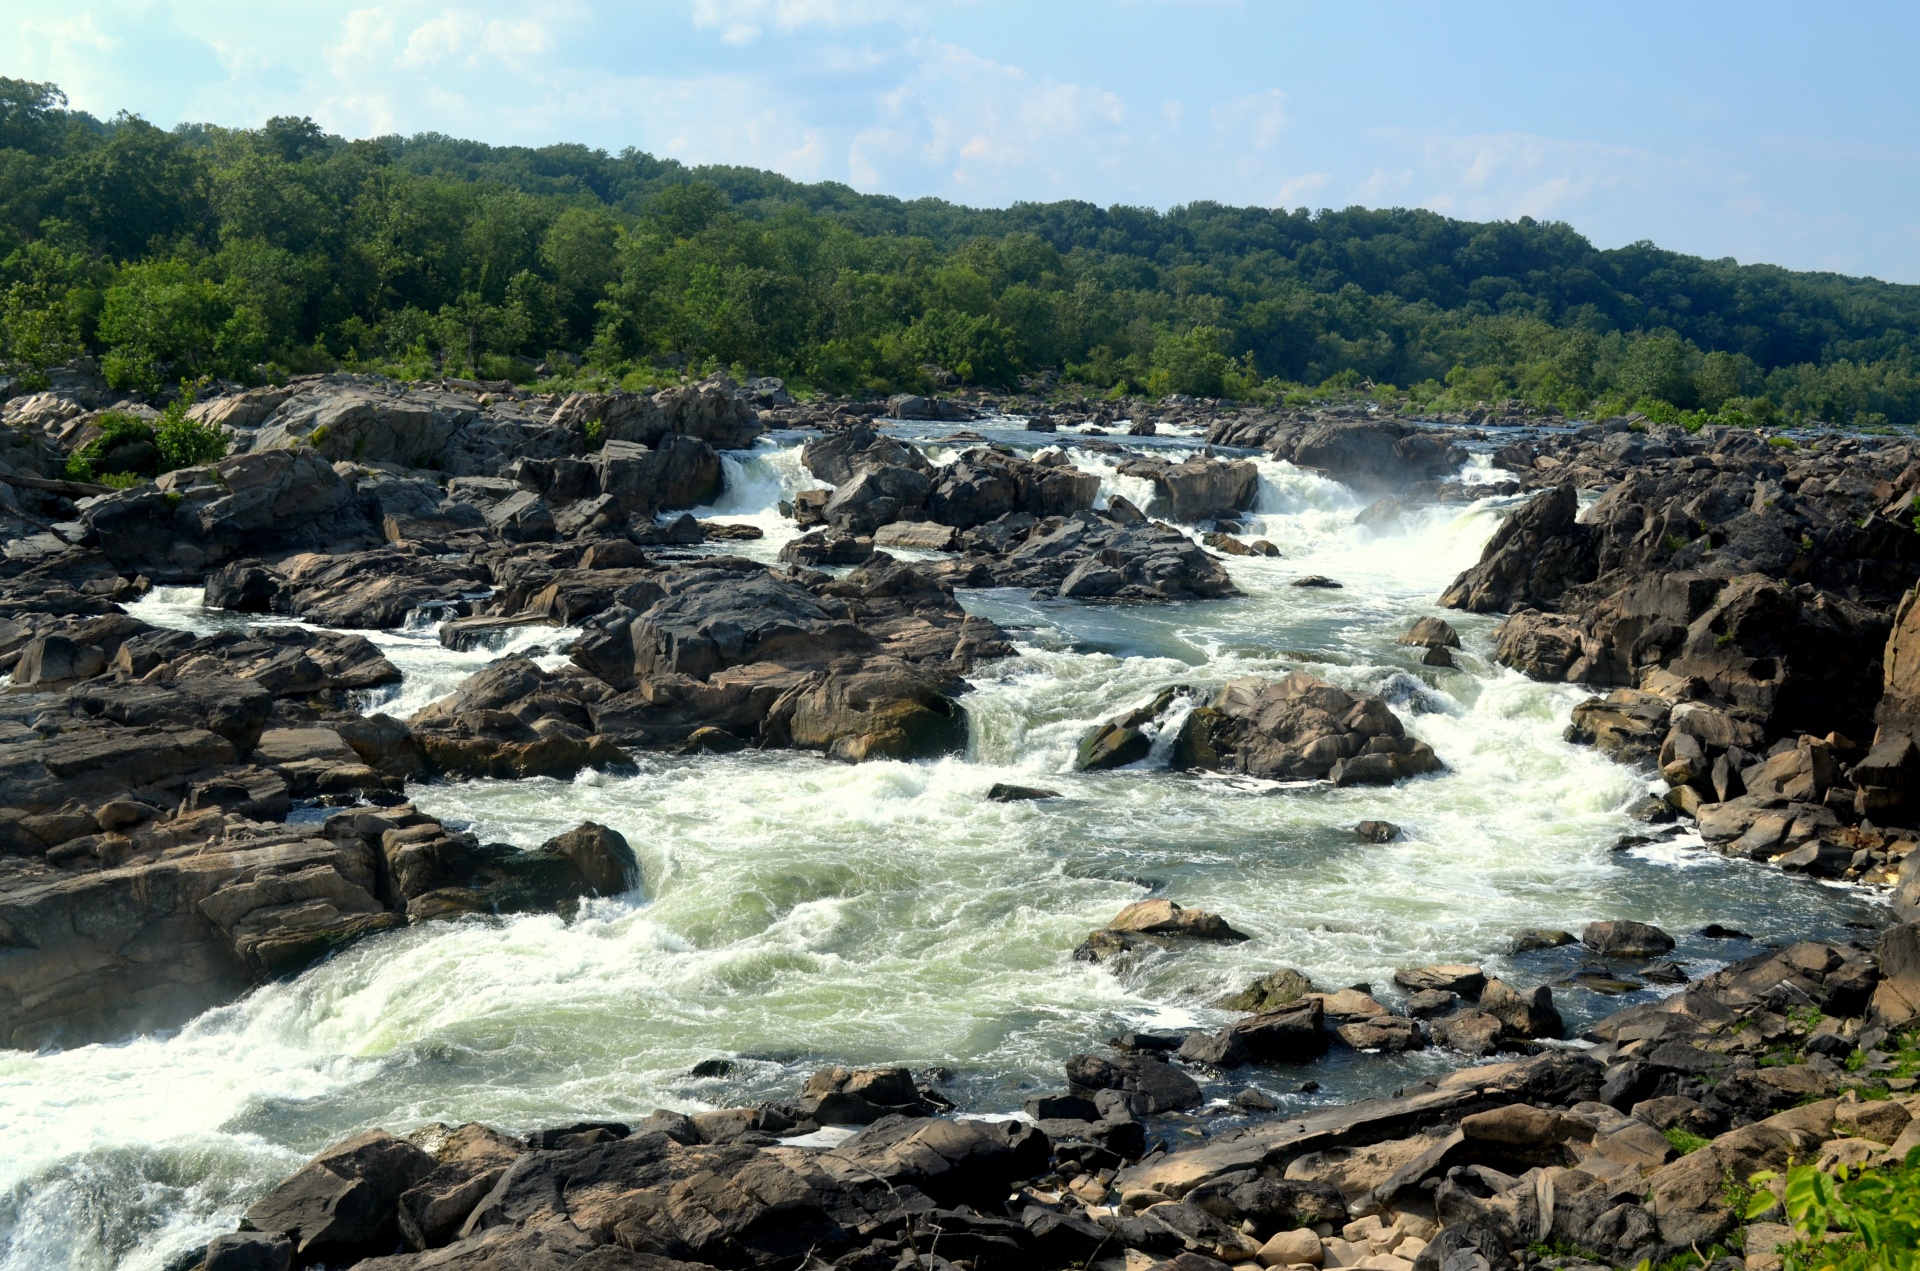 Landscape,nature,river,potomac,great falls - free photo from needpix.com AM...